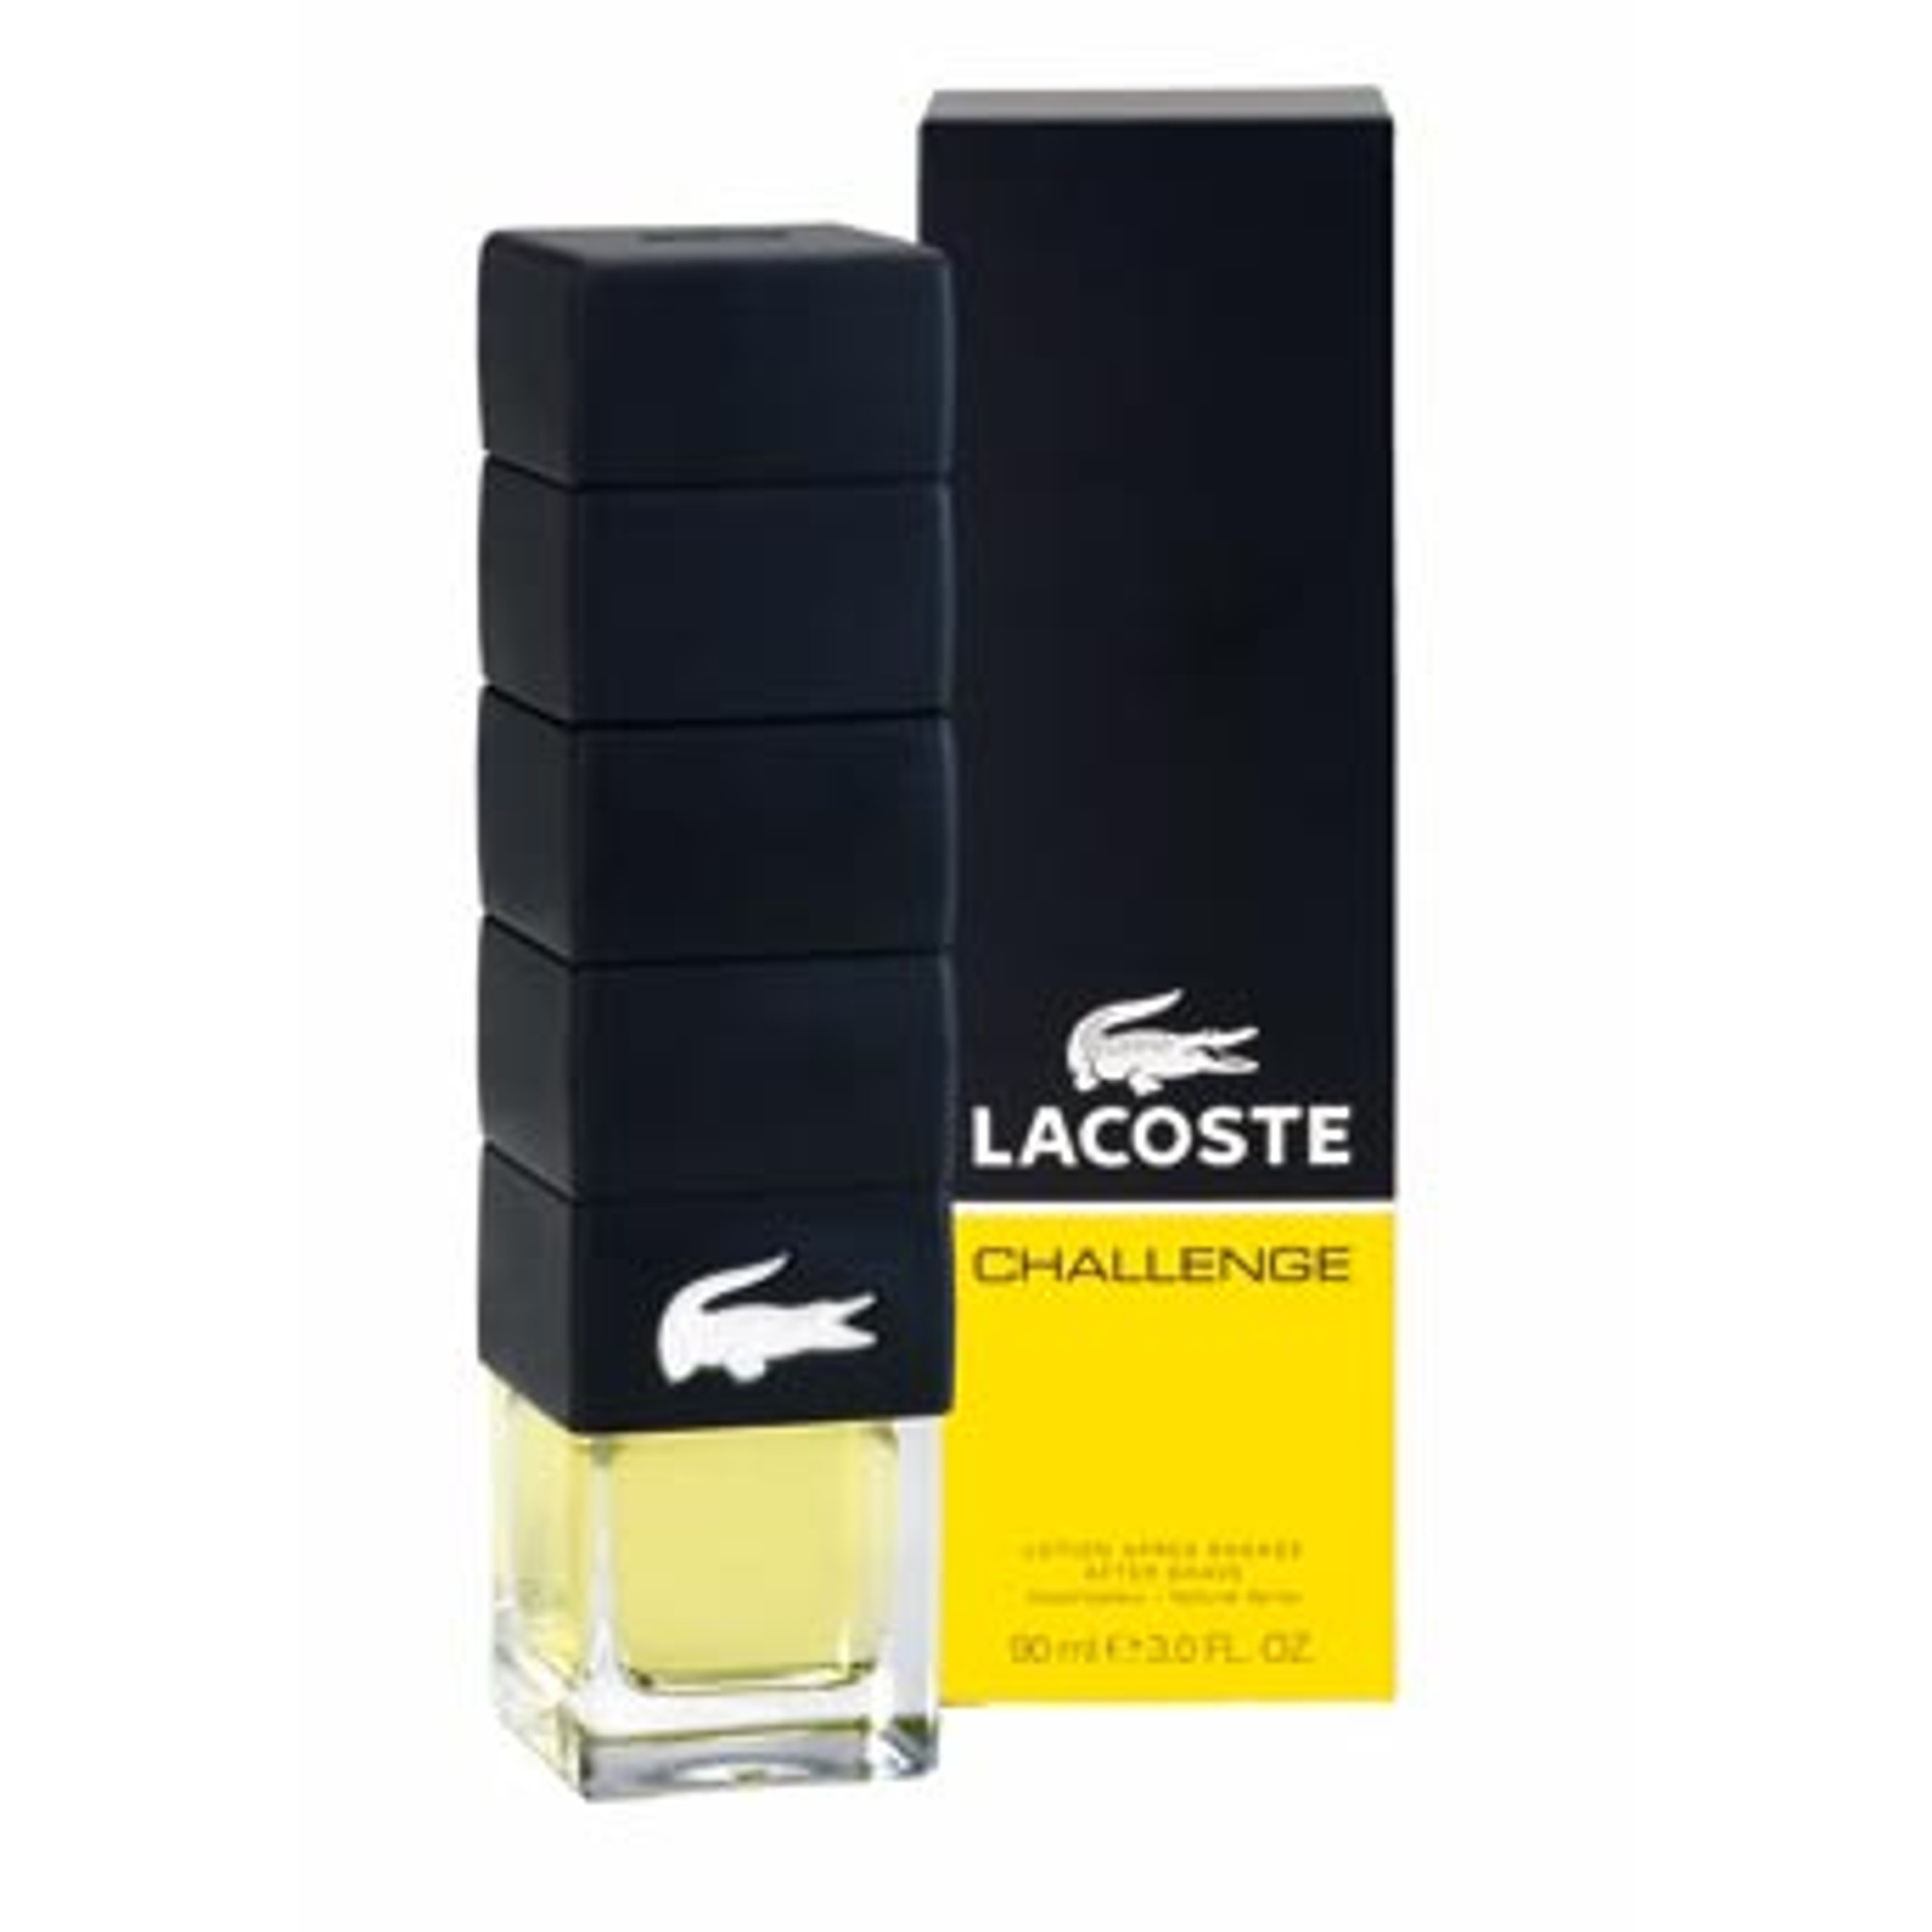 Lacoste Challenge Cologne Men by Lacoste 3 oz Edt Spray - HottPerfume.com